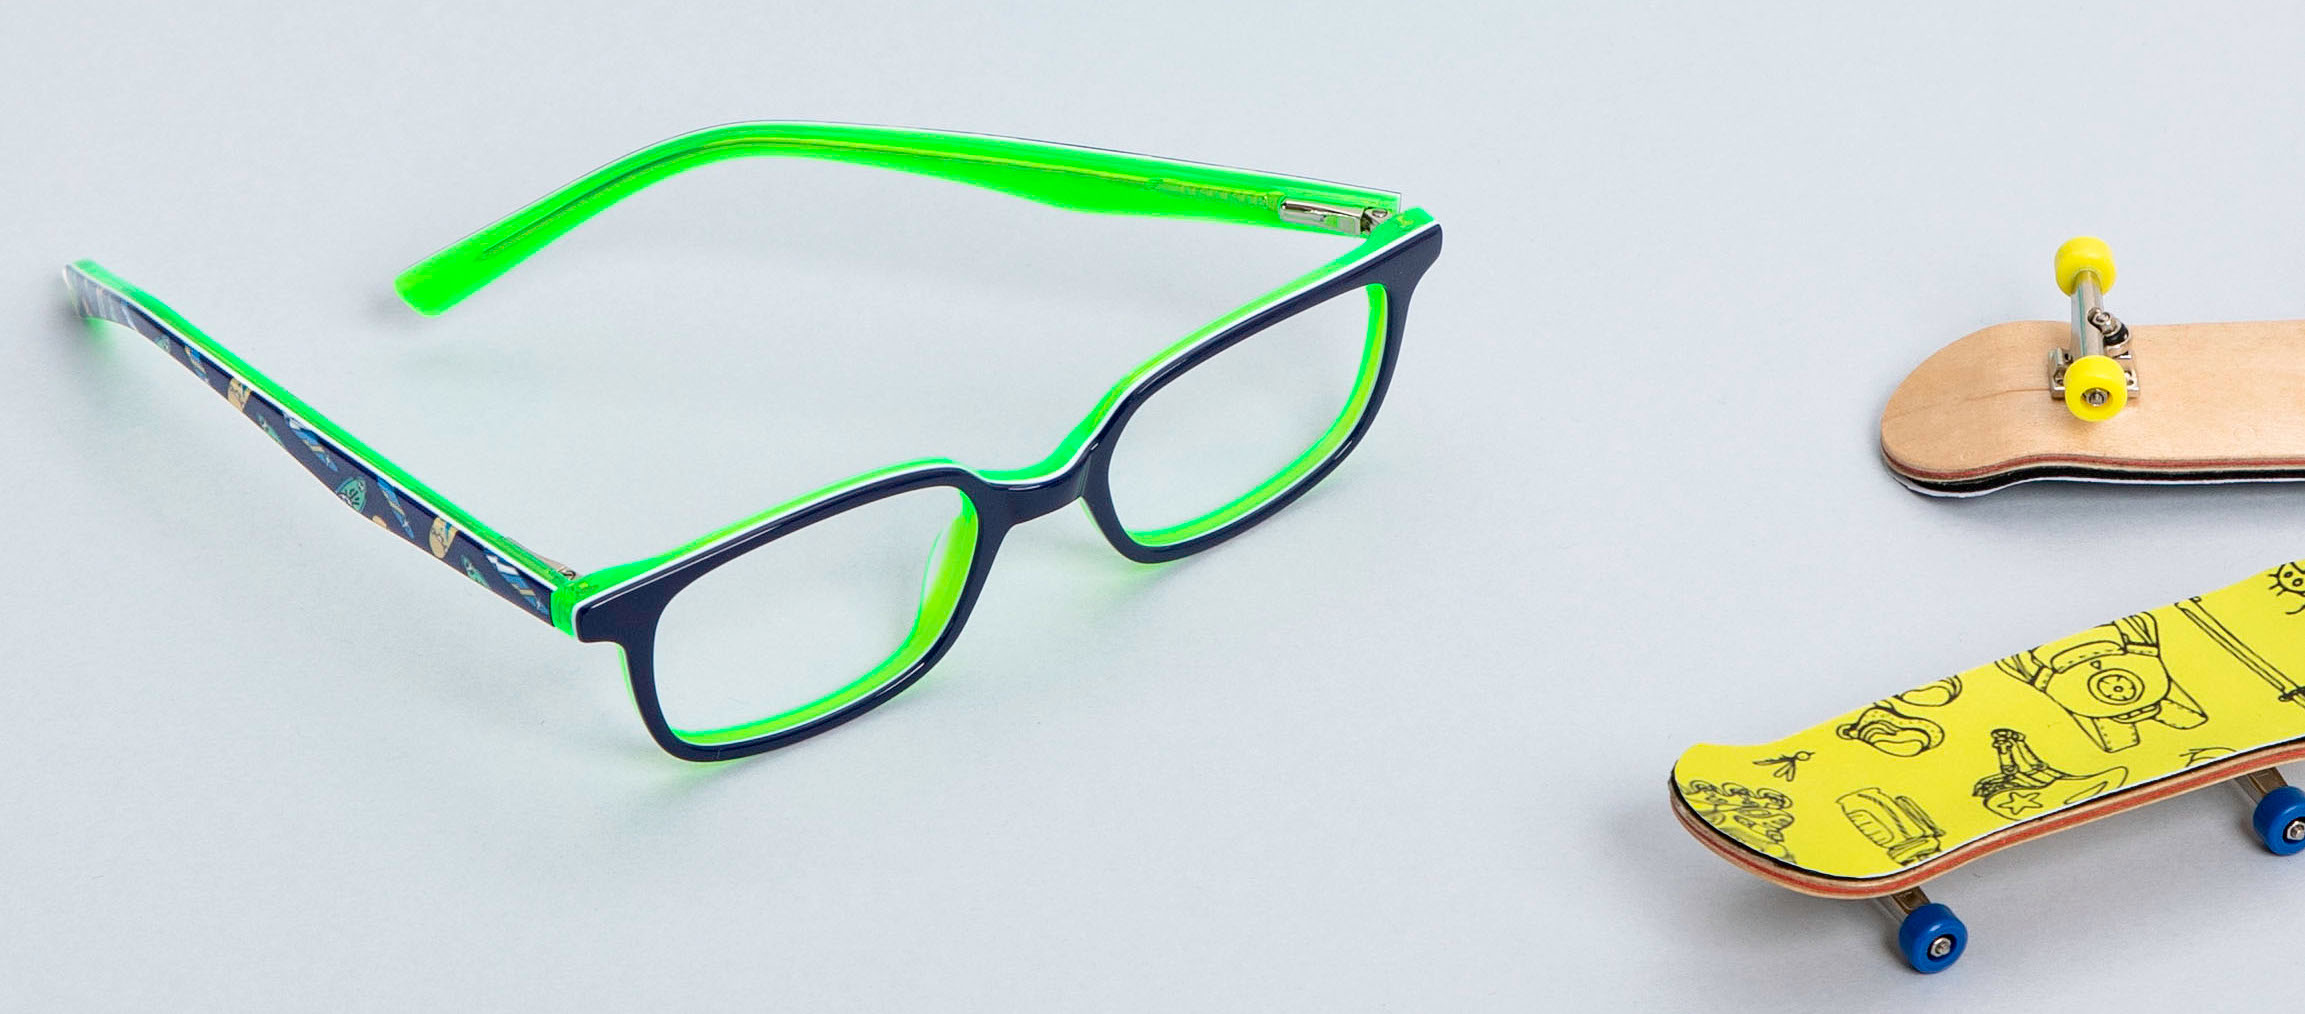 Zorg Lao Over instelling Sportbril voor je kind? Maak de bril sportproof! – Pearle Opticiens Blog